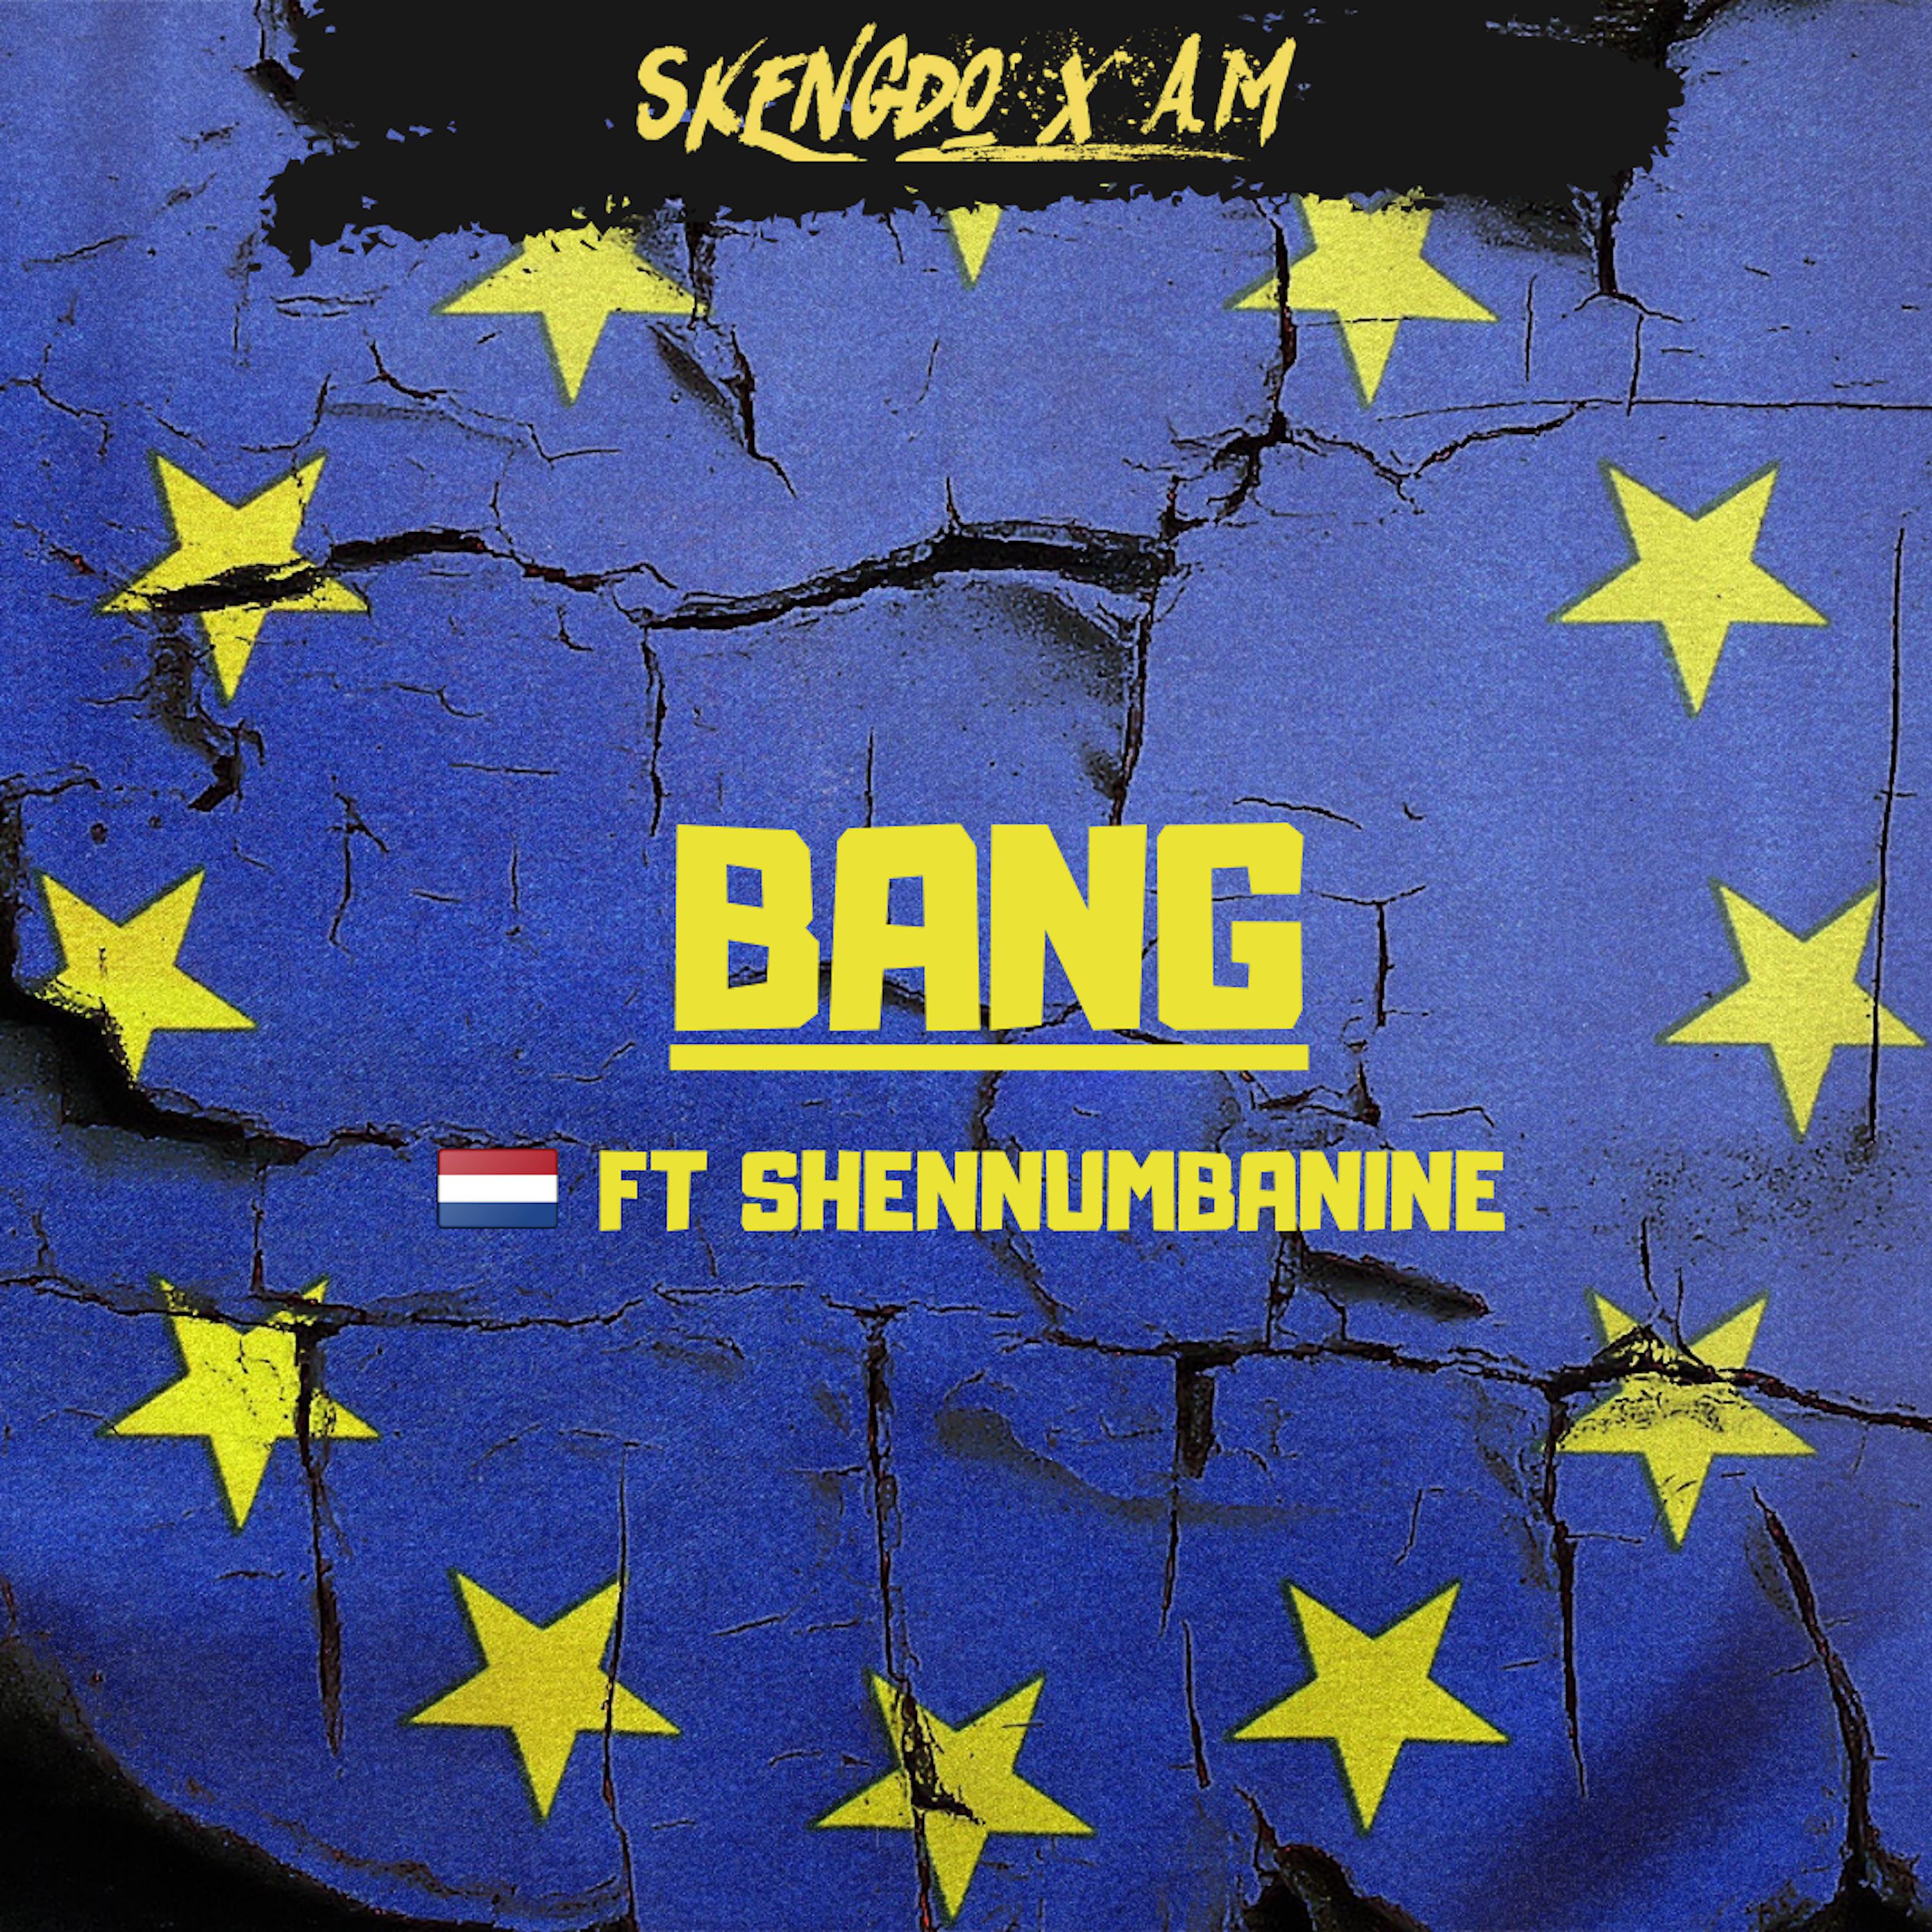 Skengdo, Am, Shennumbanine - Bang (feat. Shennumbanine) - минус, скачать бесплатно